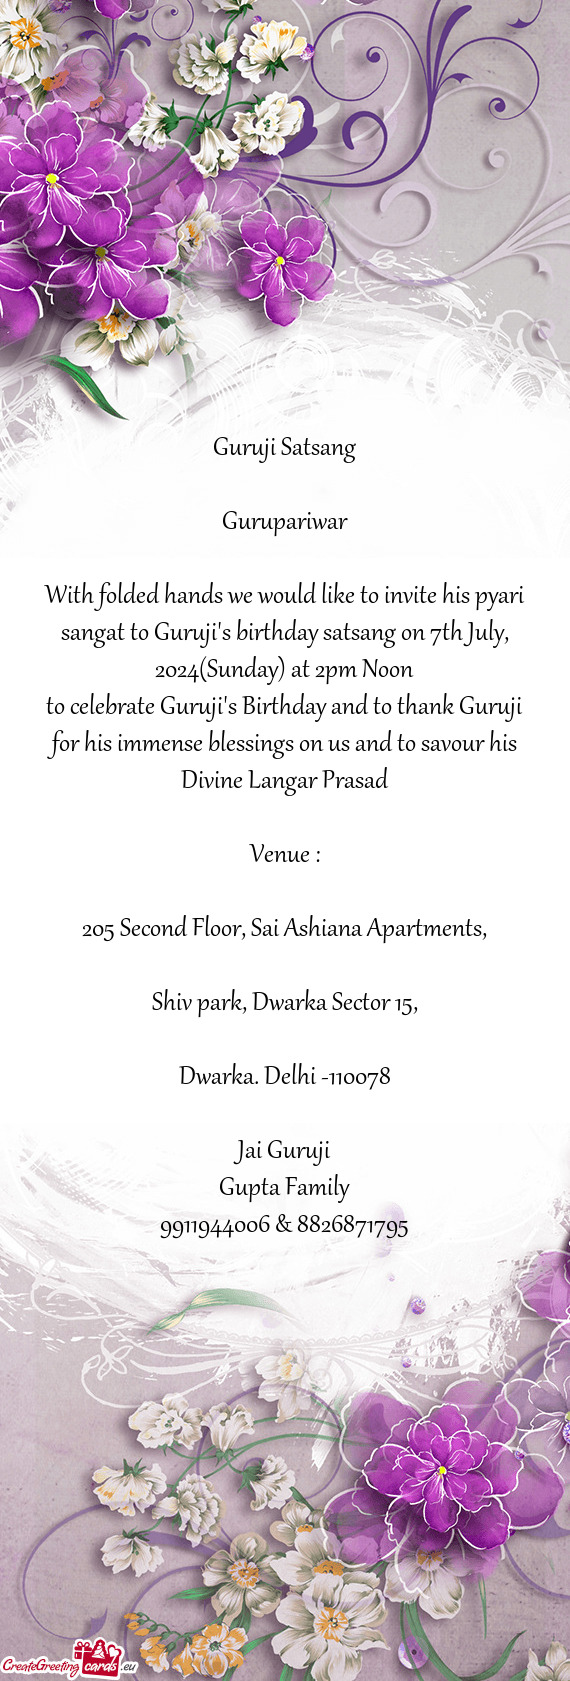 With folded hands we would like to invite his pyari sangat to Guruji